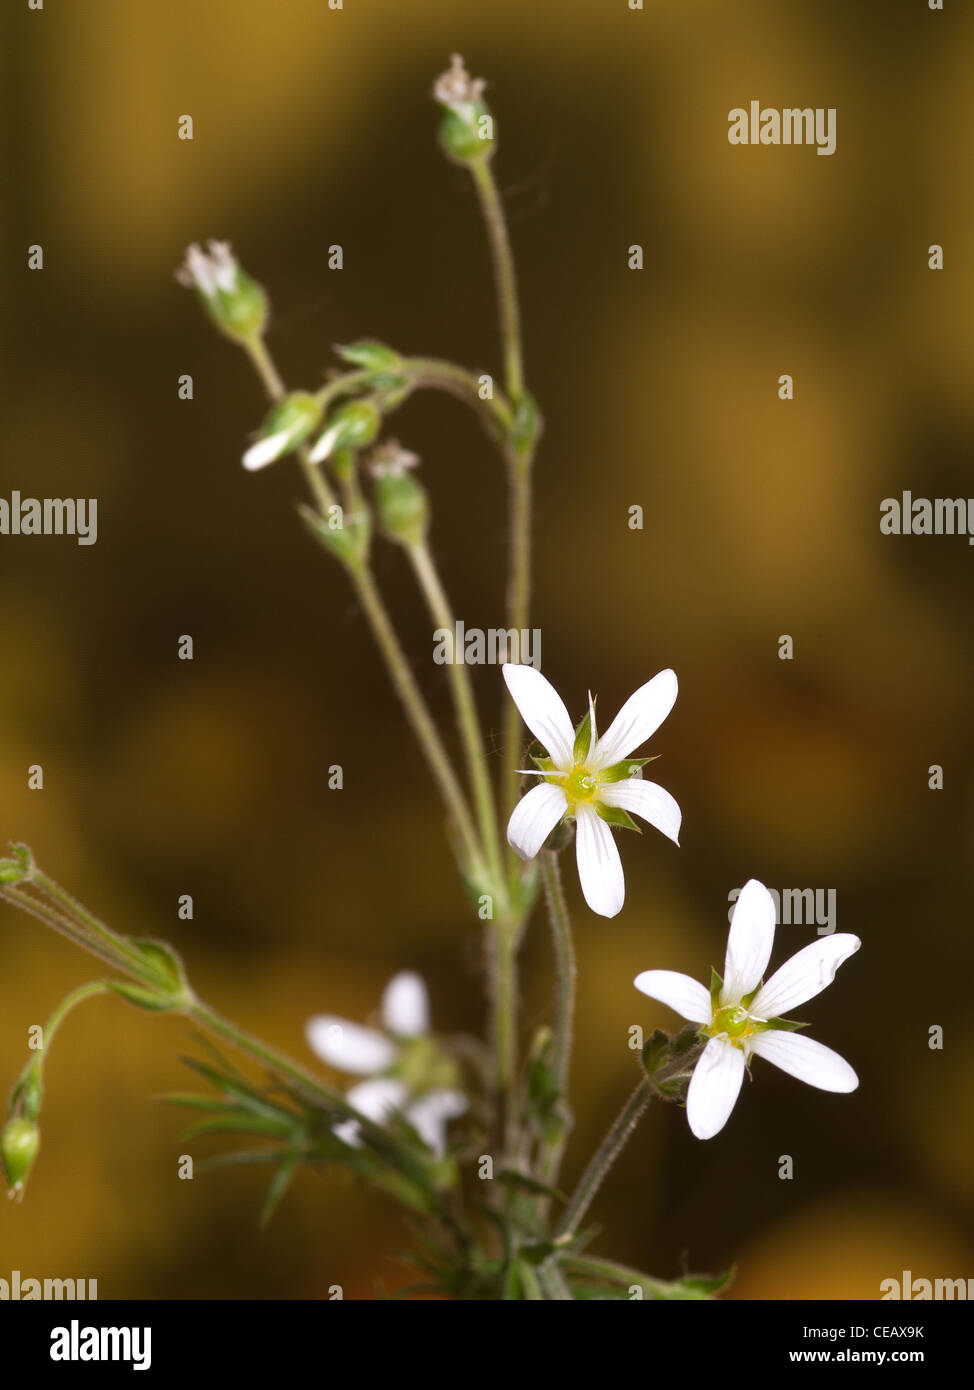 Slander leaf  Sandwort, Minuartia hybrida, portrait of white flowers with nice out focus background. Stock Photo